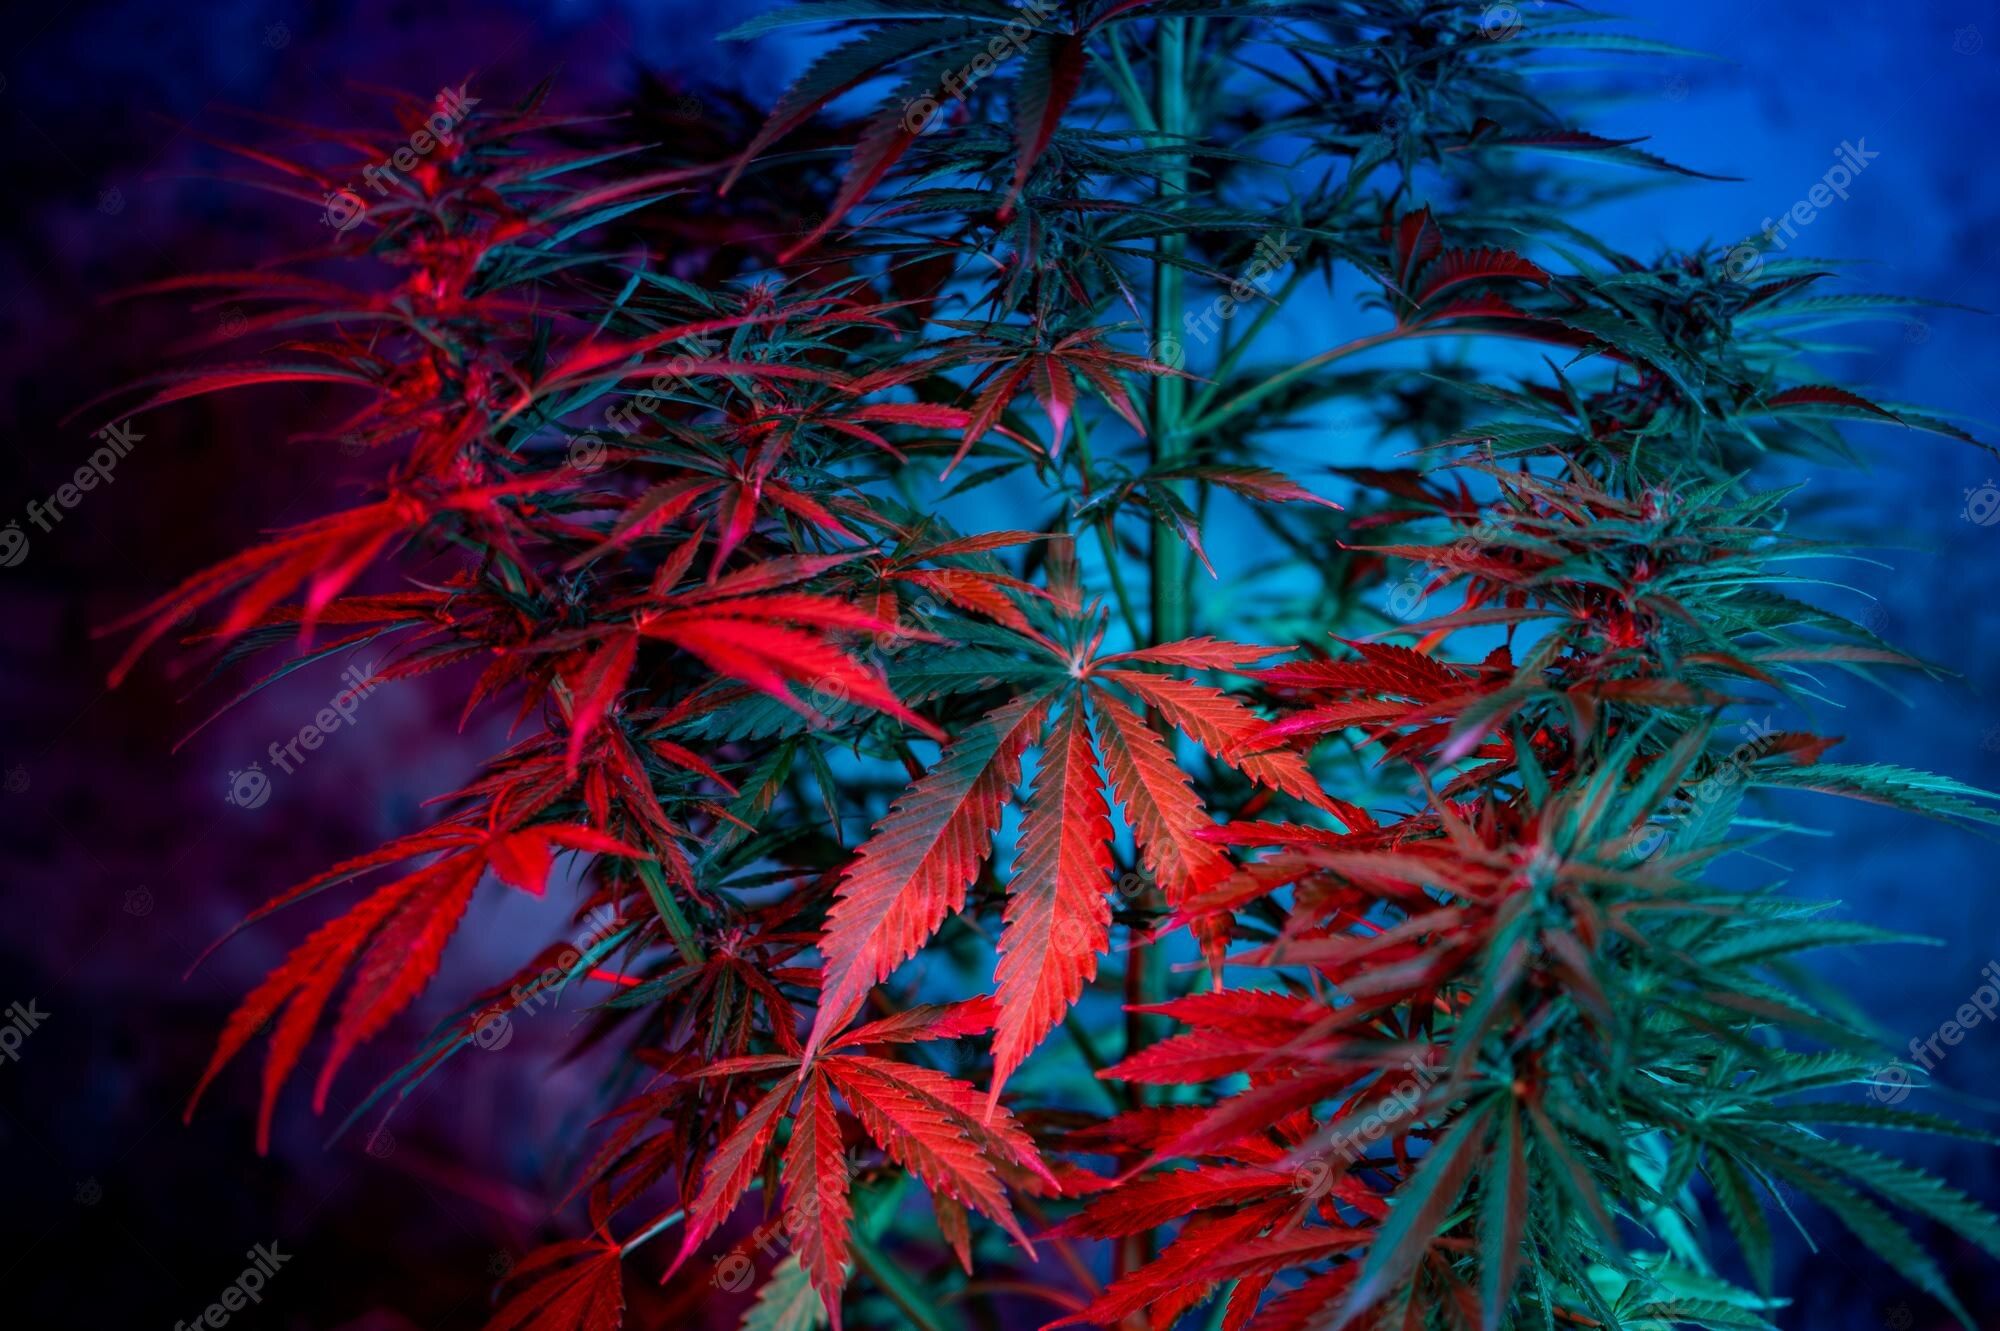 Premium Photo. Marijuana plant with lighting